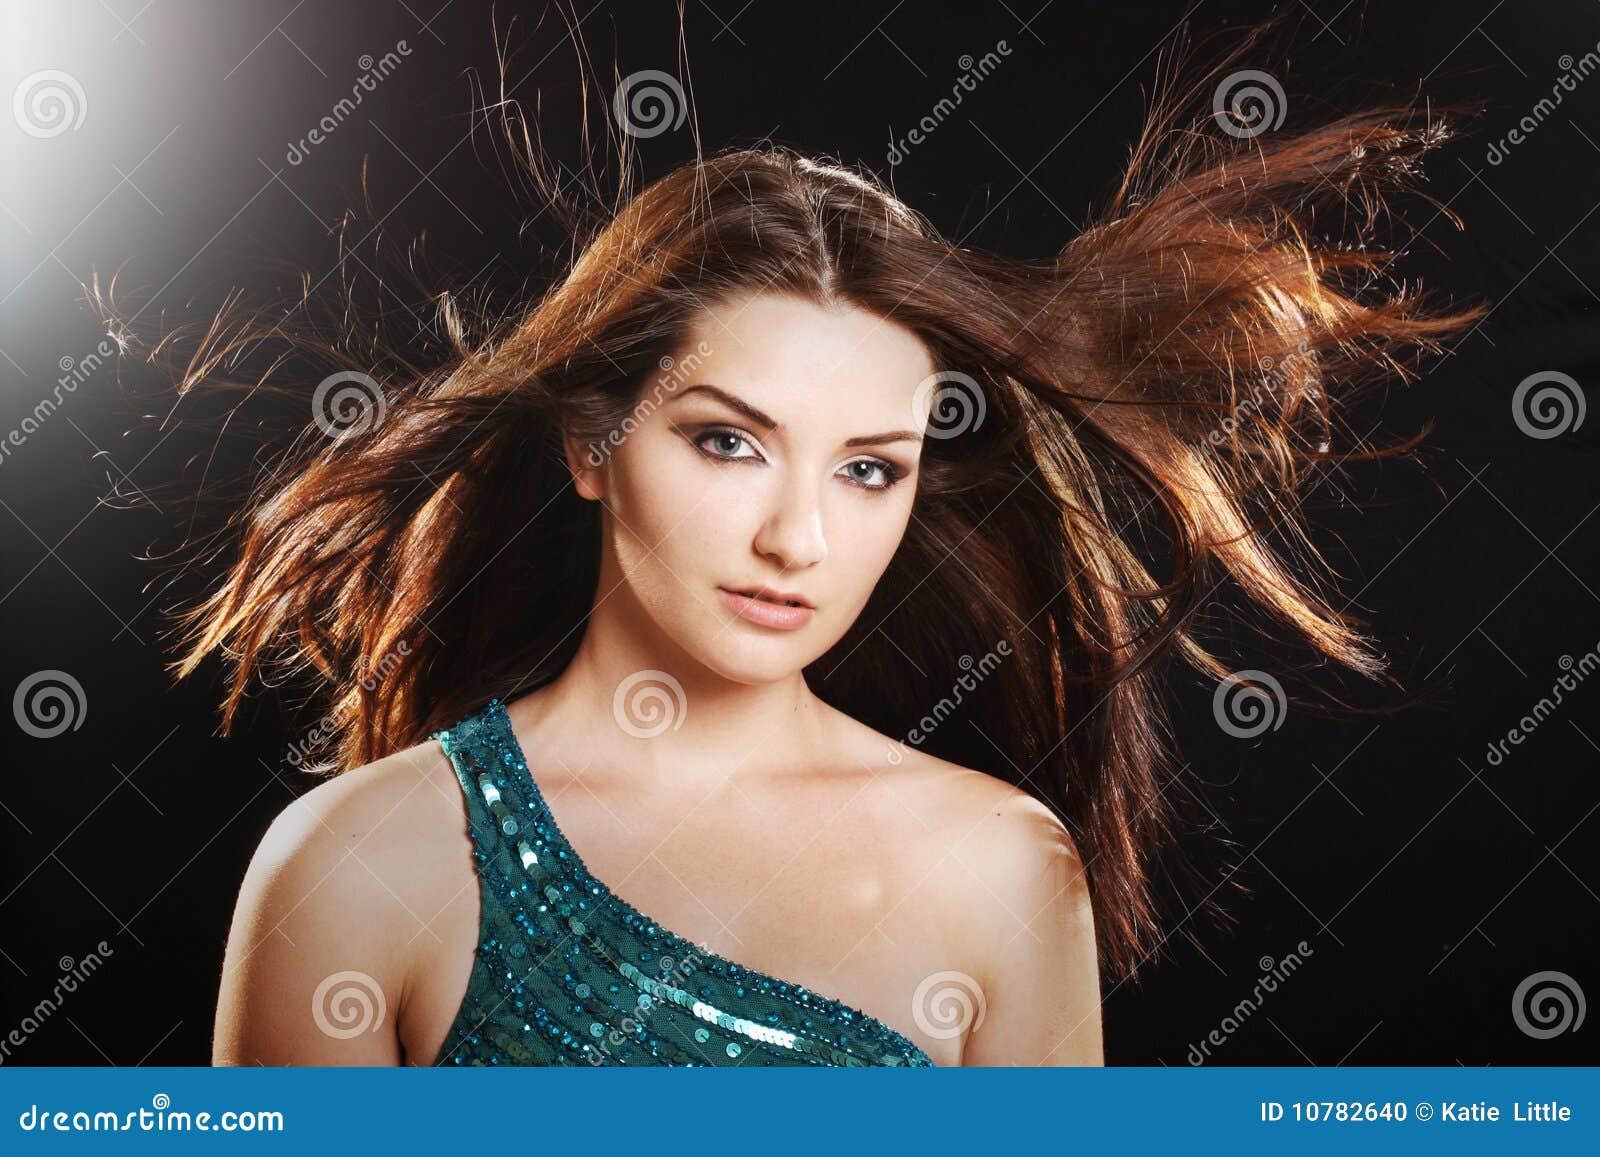 Glamorous Woman stock photo. Image of wind, girl, woman - 10782640